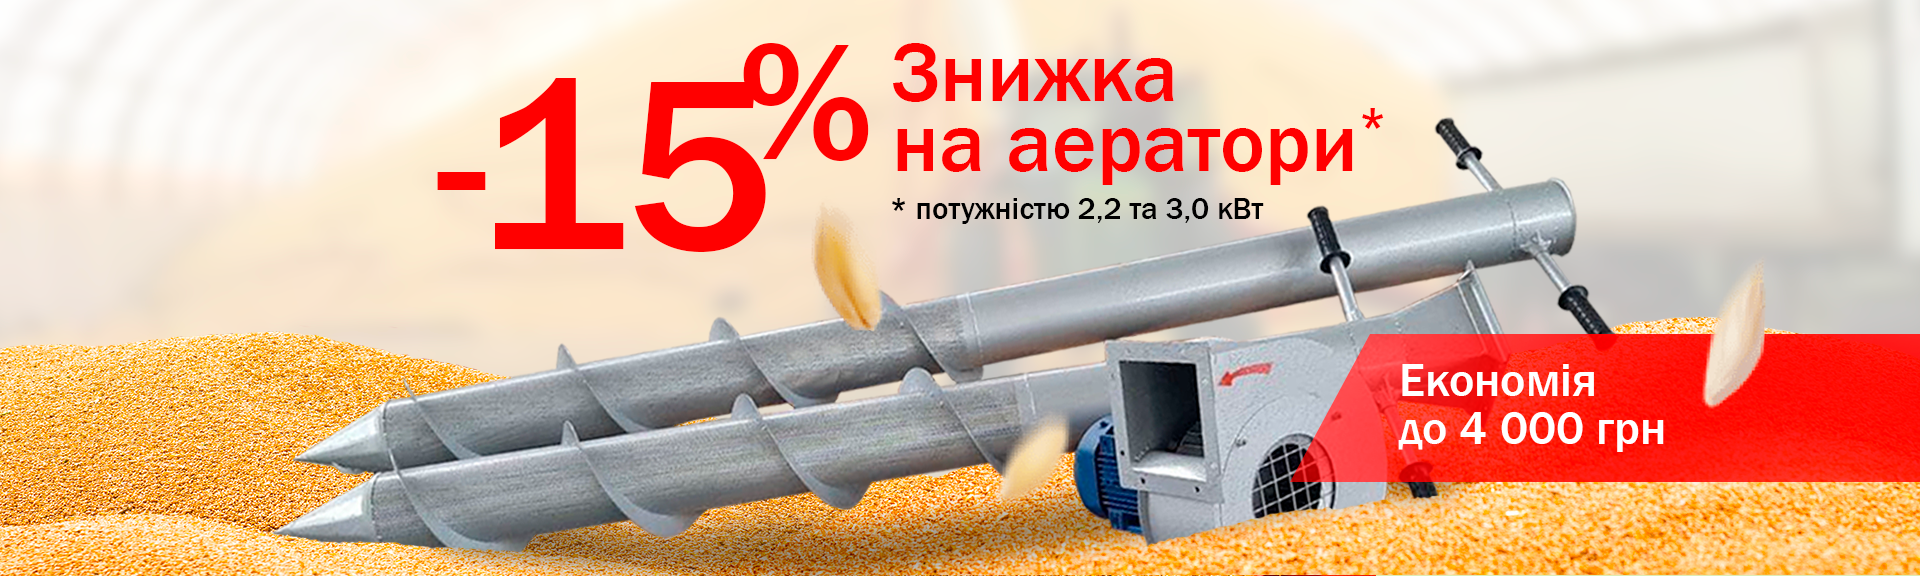 Знижка на аератори зерна 15%